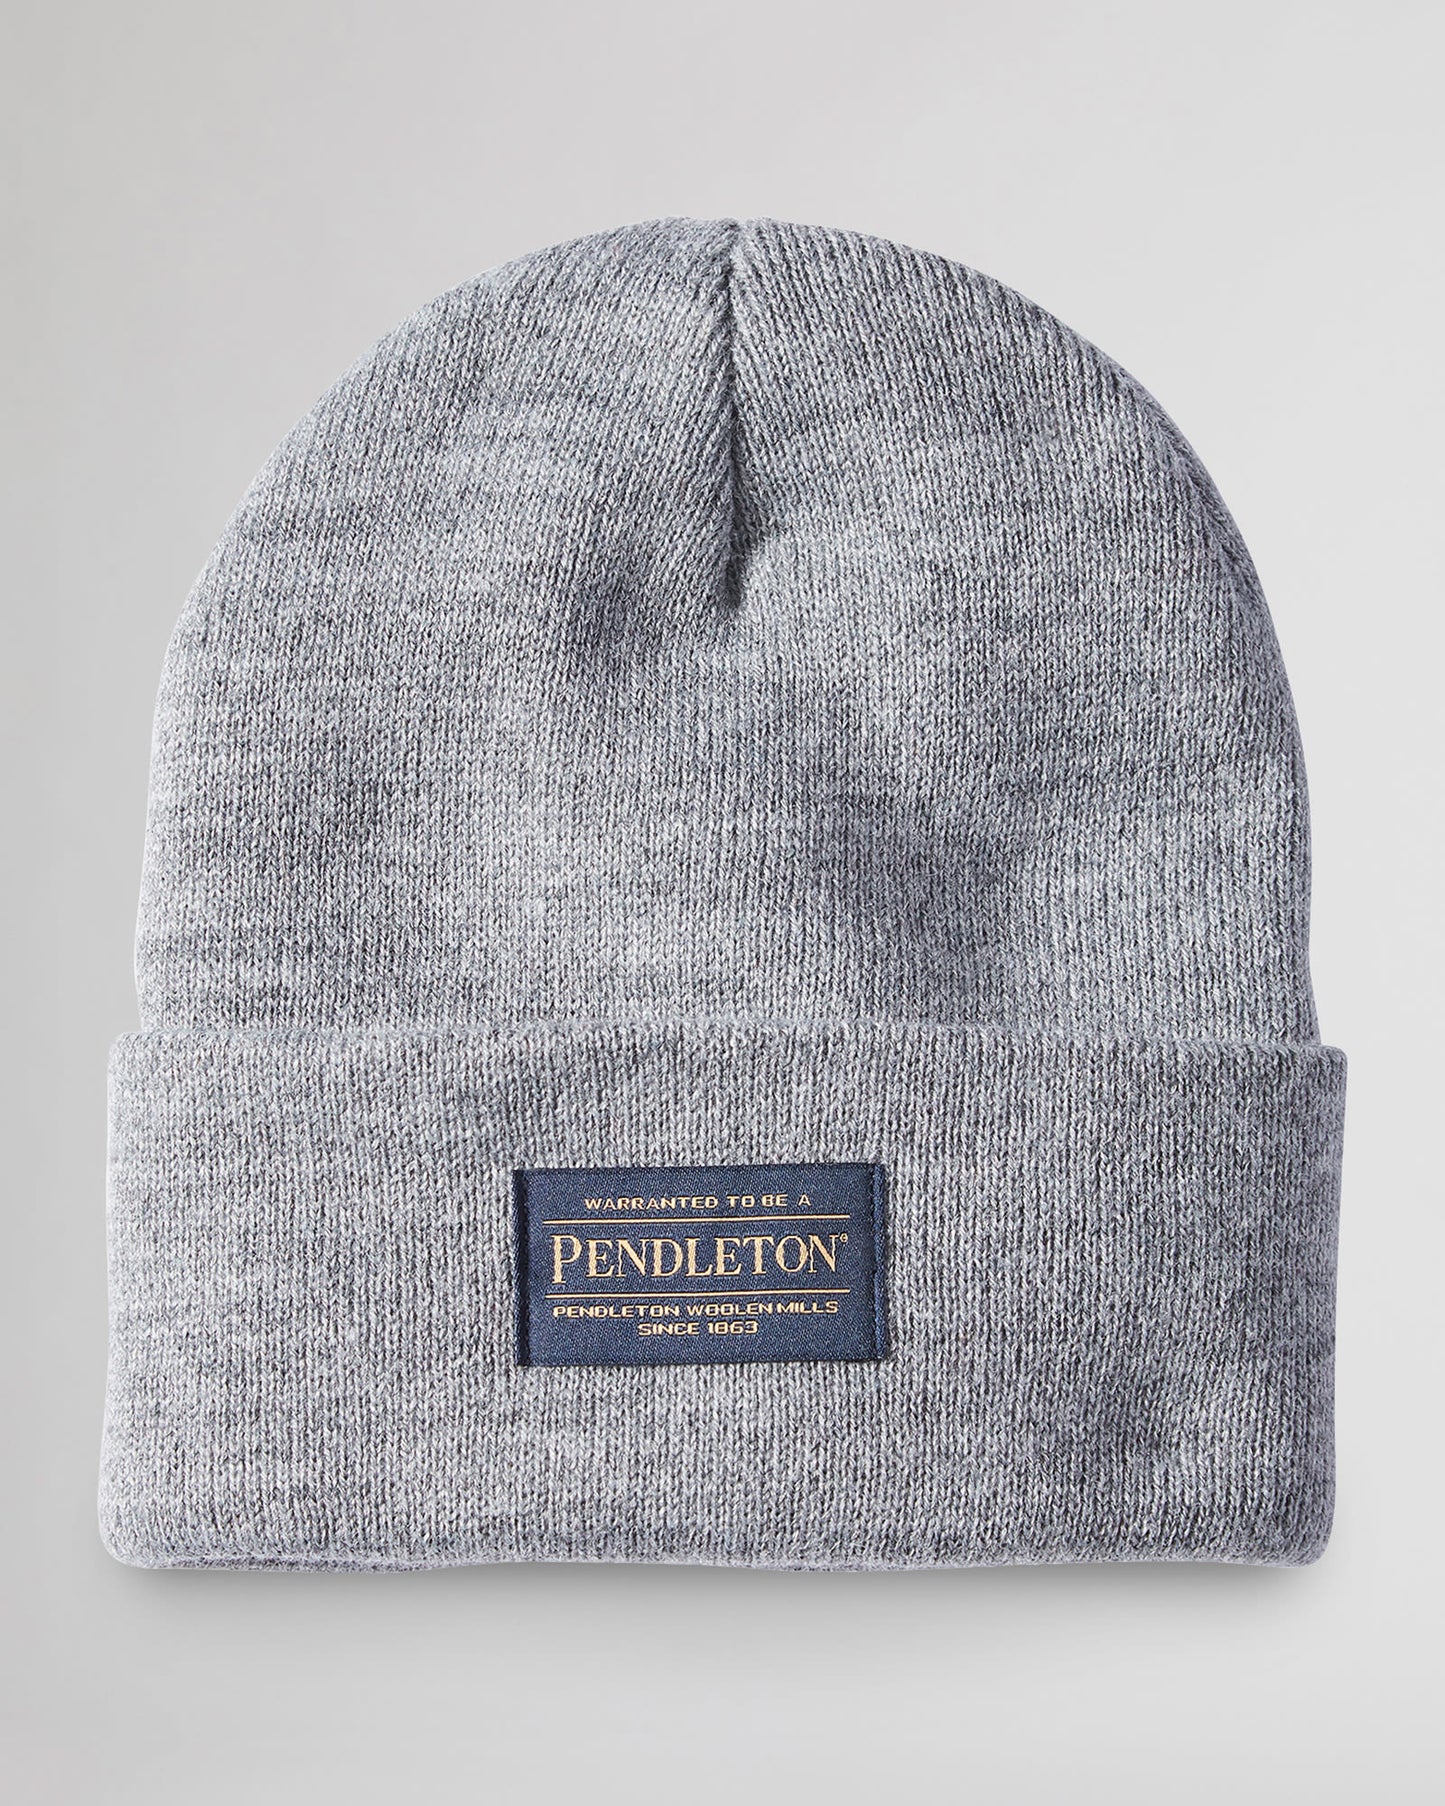 
                  
                    Pendleton Beanie Hats
                  
                